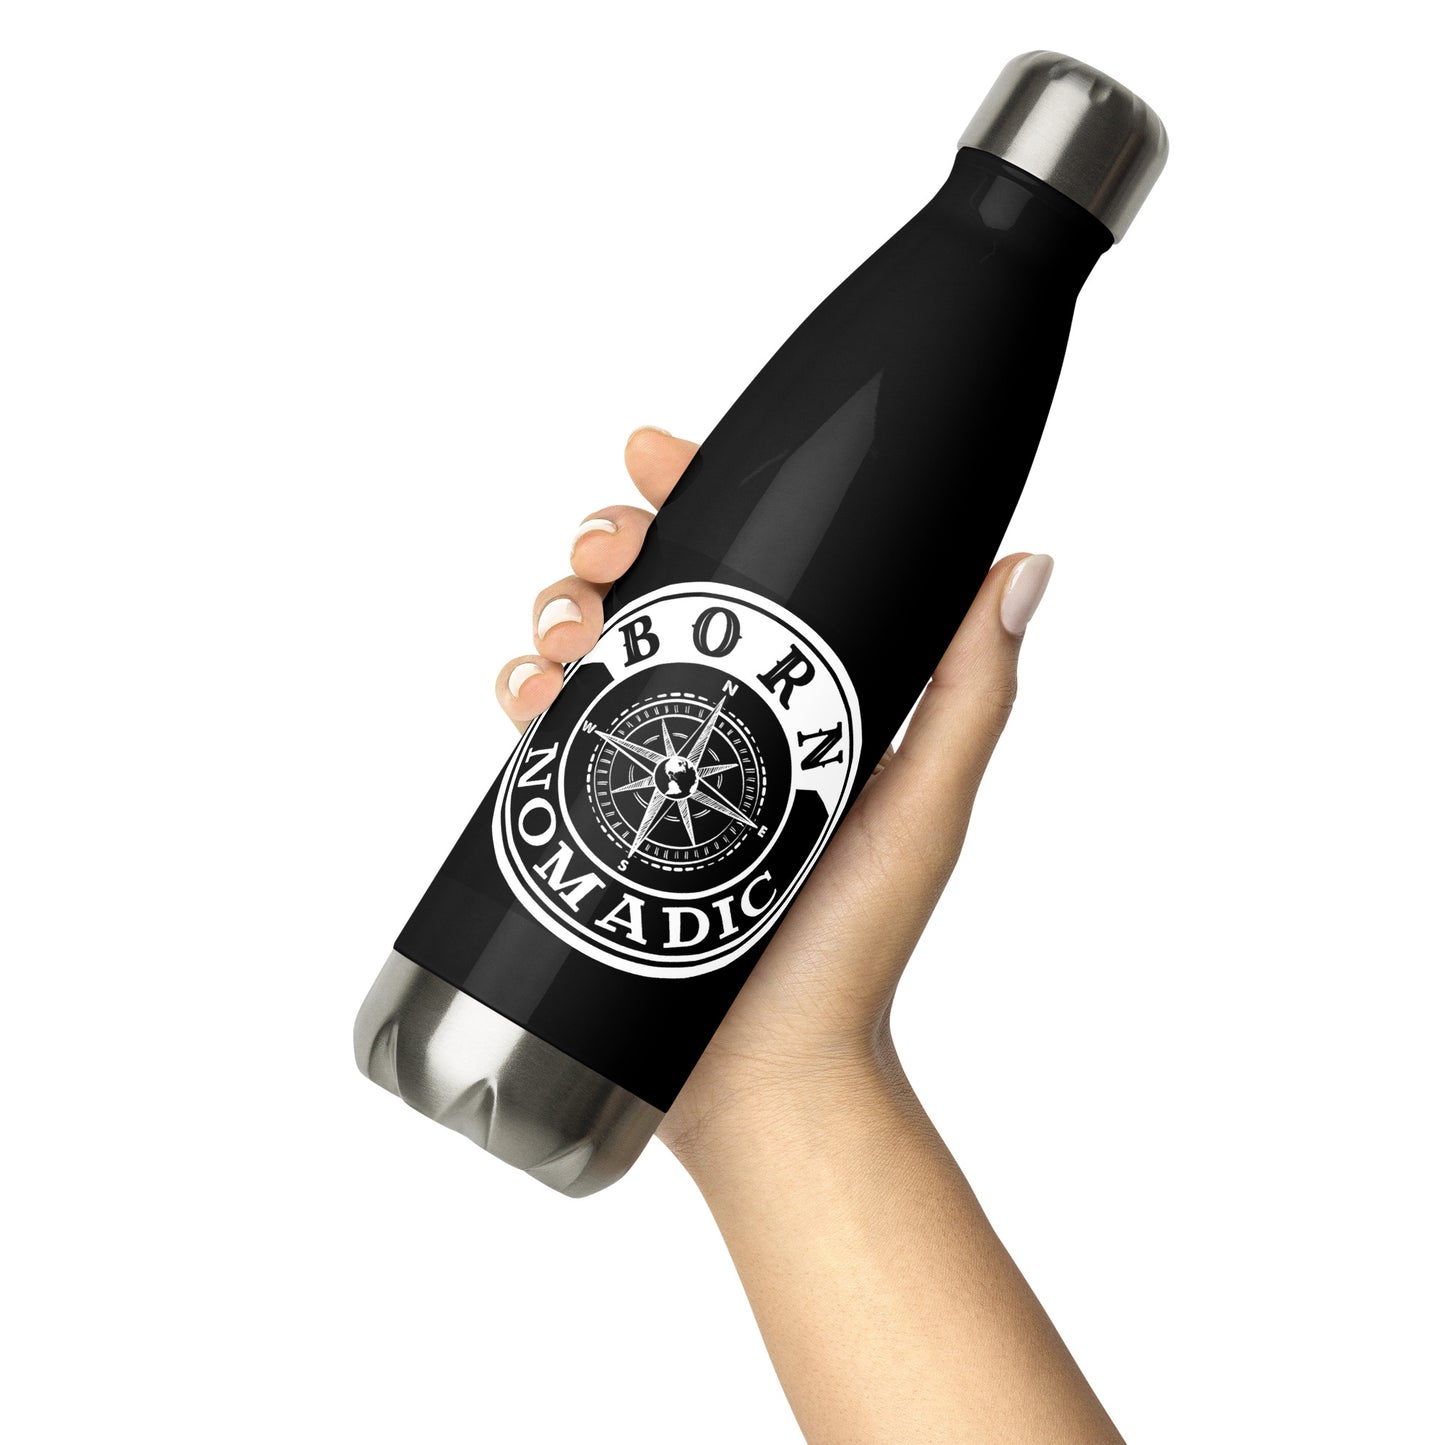 Born Nomadic Black Logo Stainless Steel Water Bottle